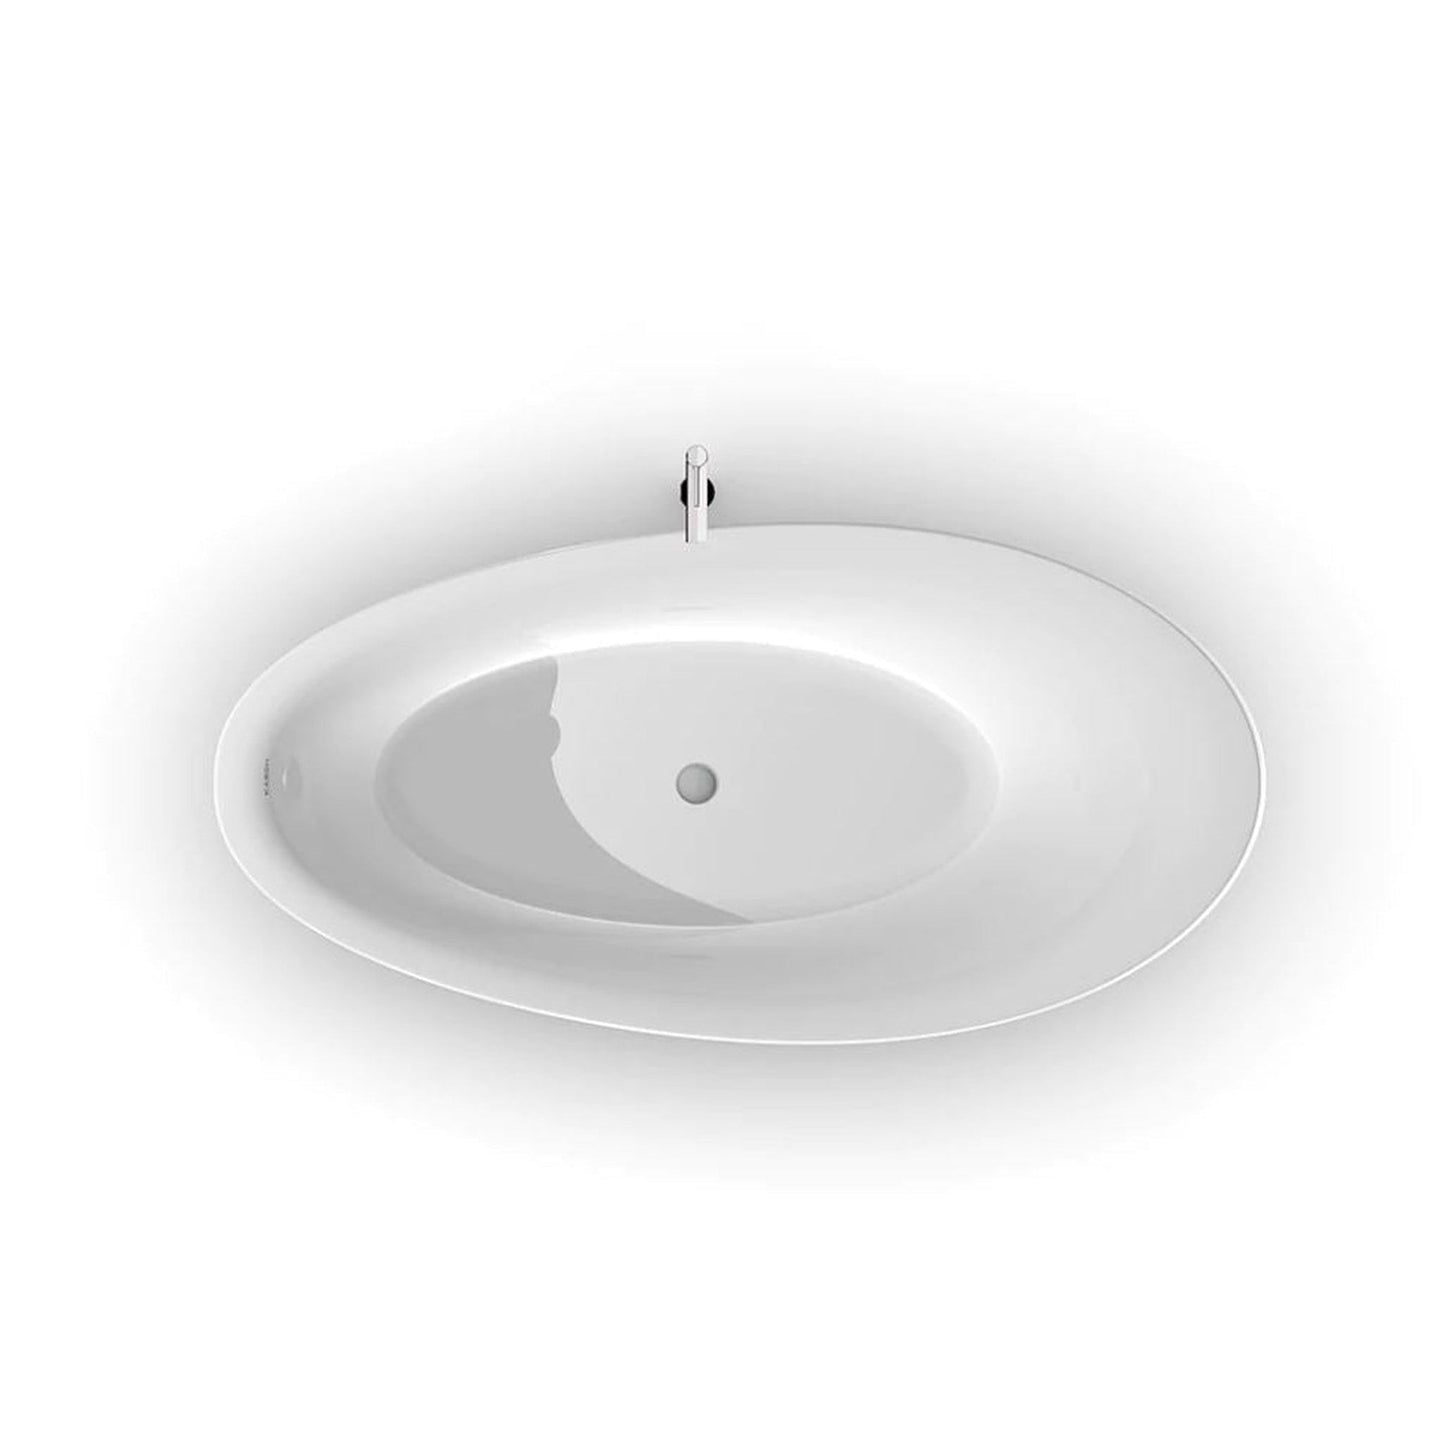 TONA Leonardo 71" Glossy White Acrylic Freestanding Bathtub With Chrome Drain Cover and Overflow Cover